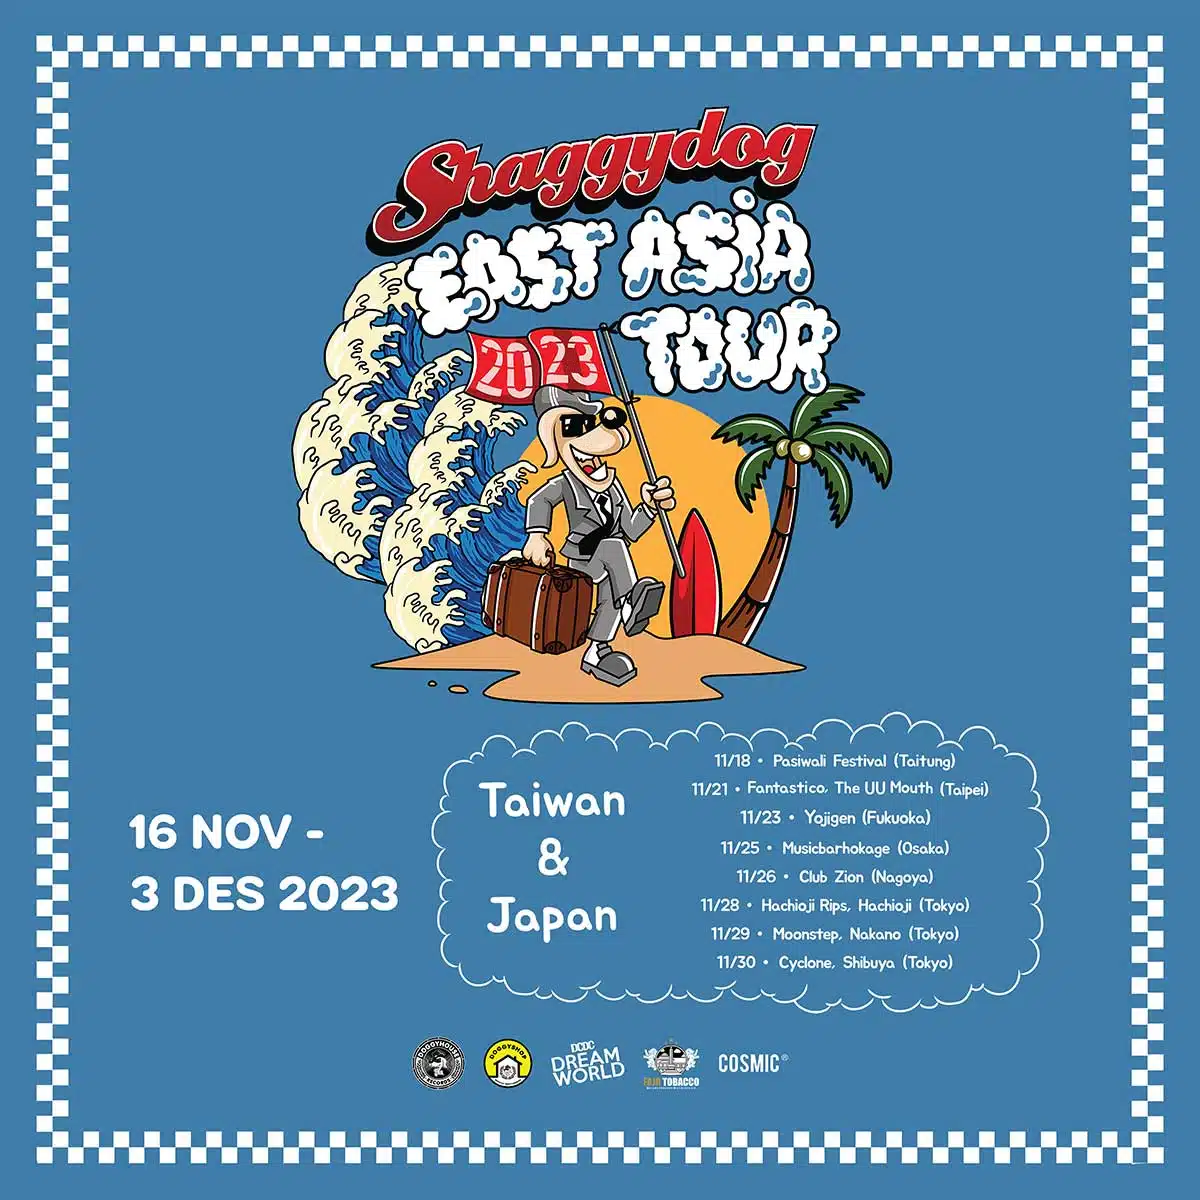 Shaggydog East Asia Tour 2023